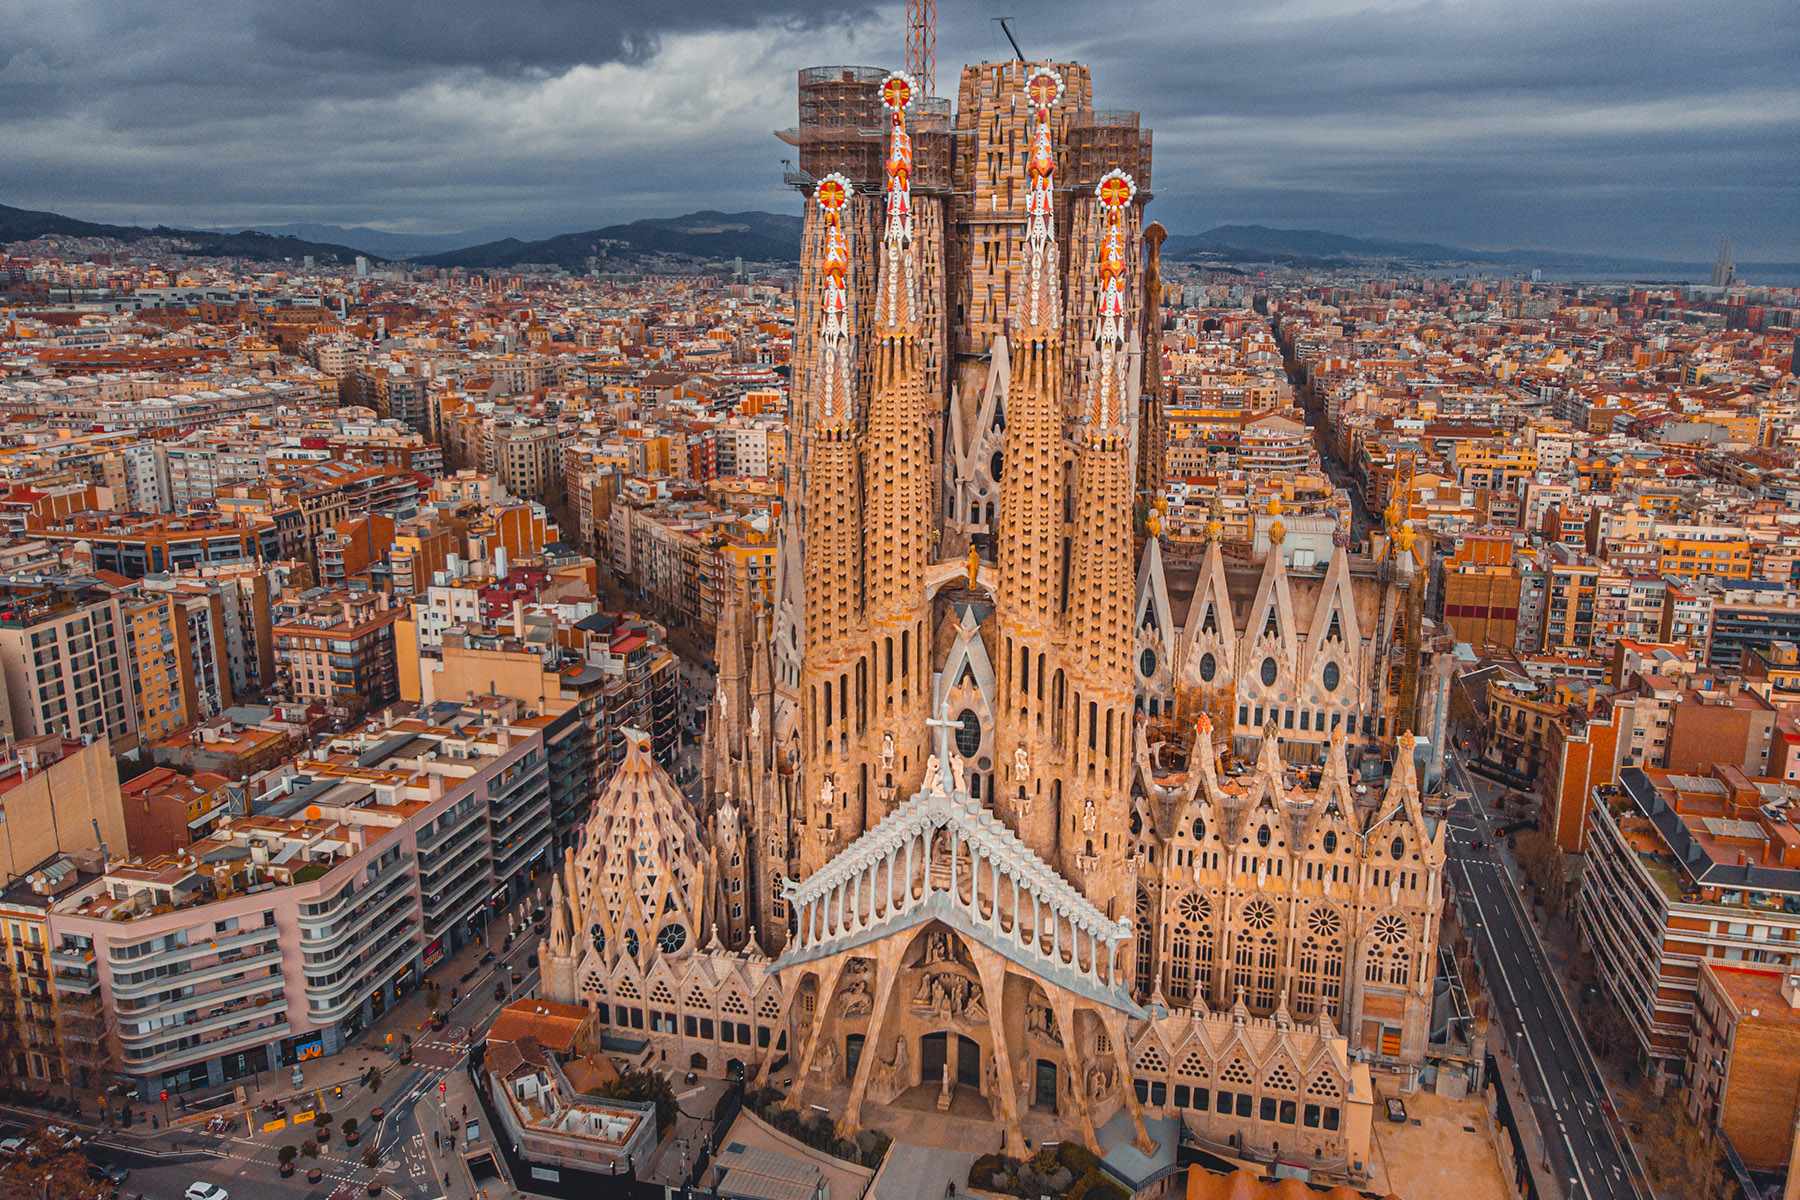 Antoni Gaudí's Sagrada Família in Barcelona